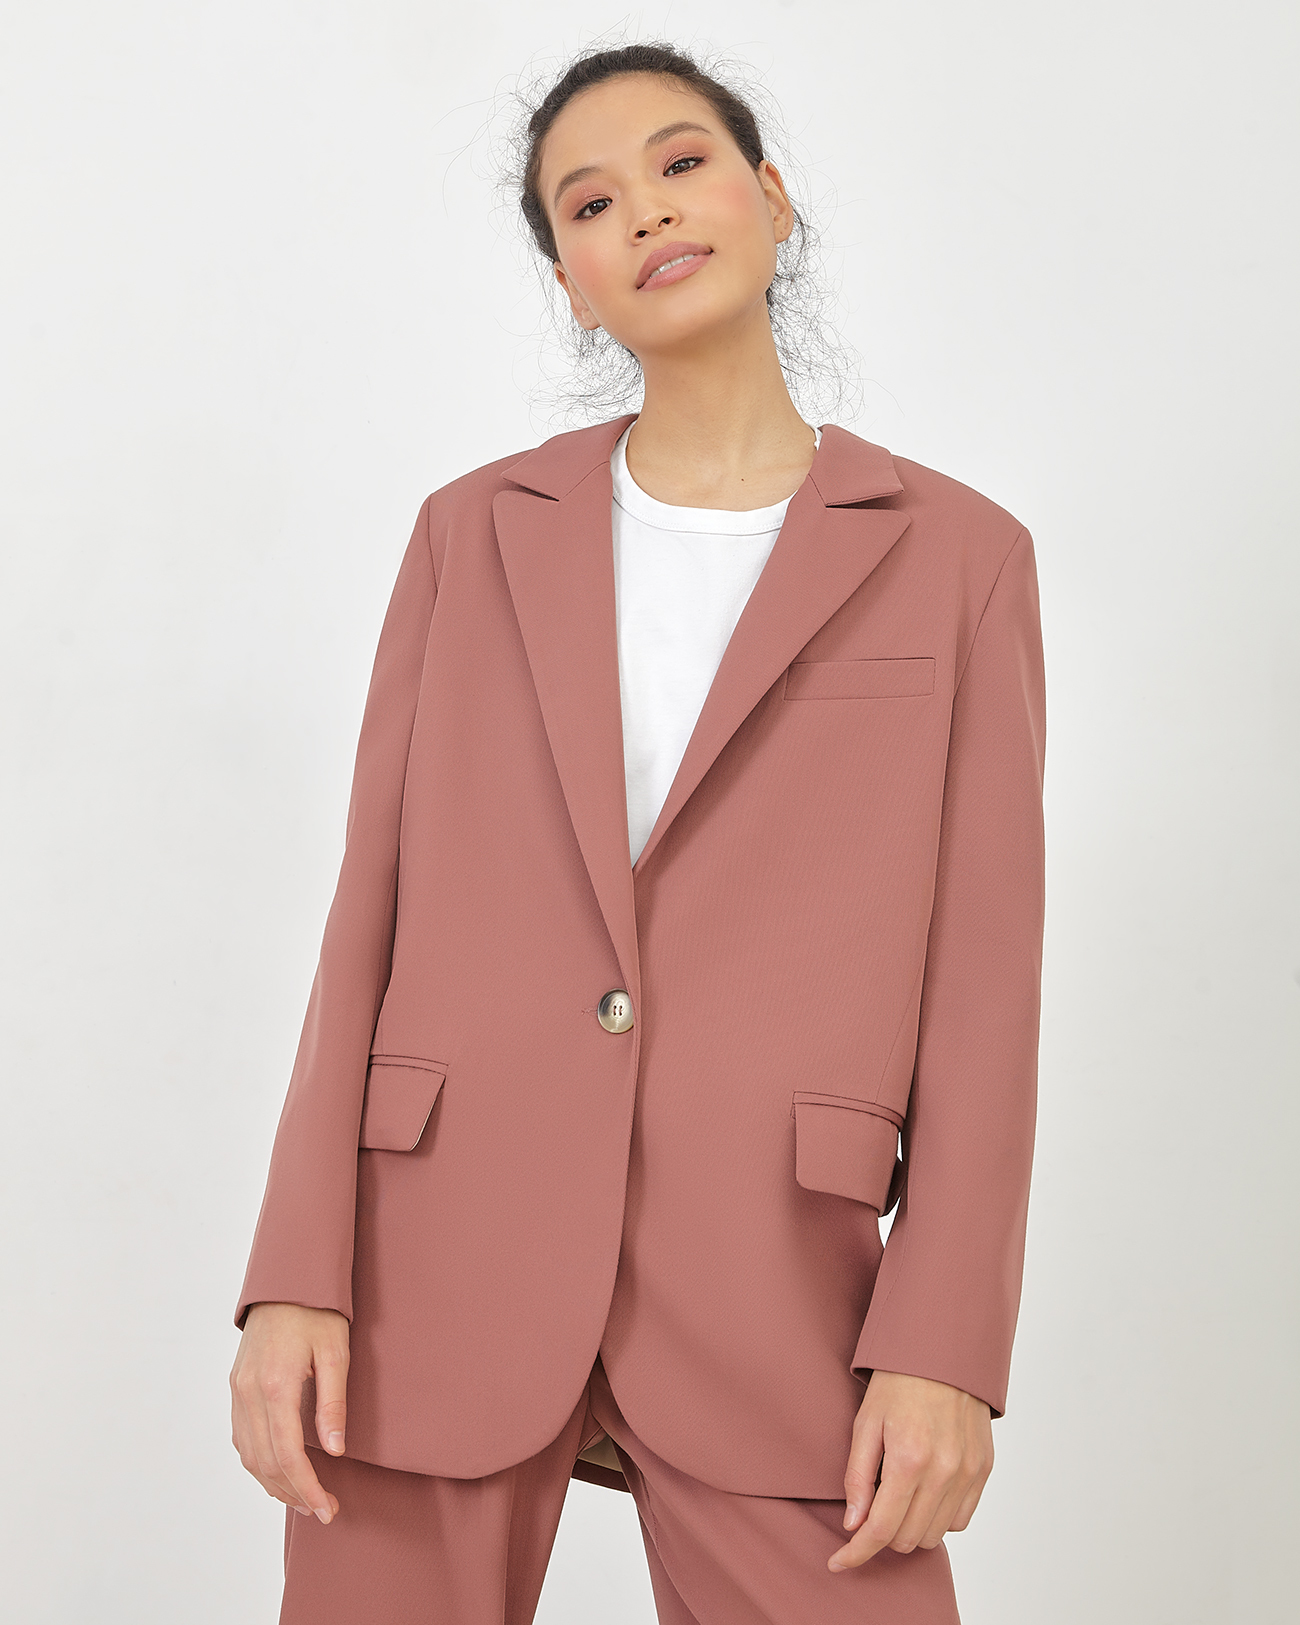 Пиджак розового цвета